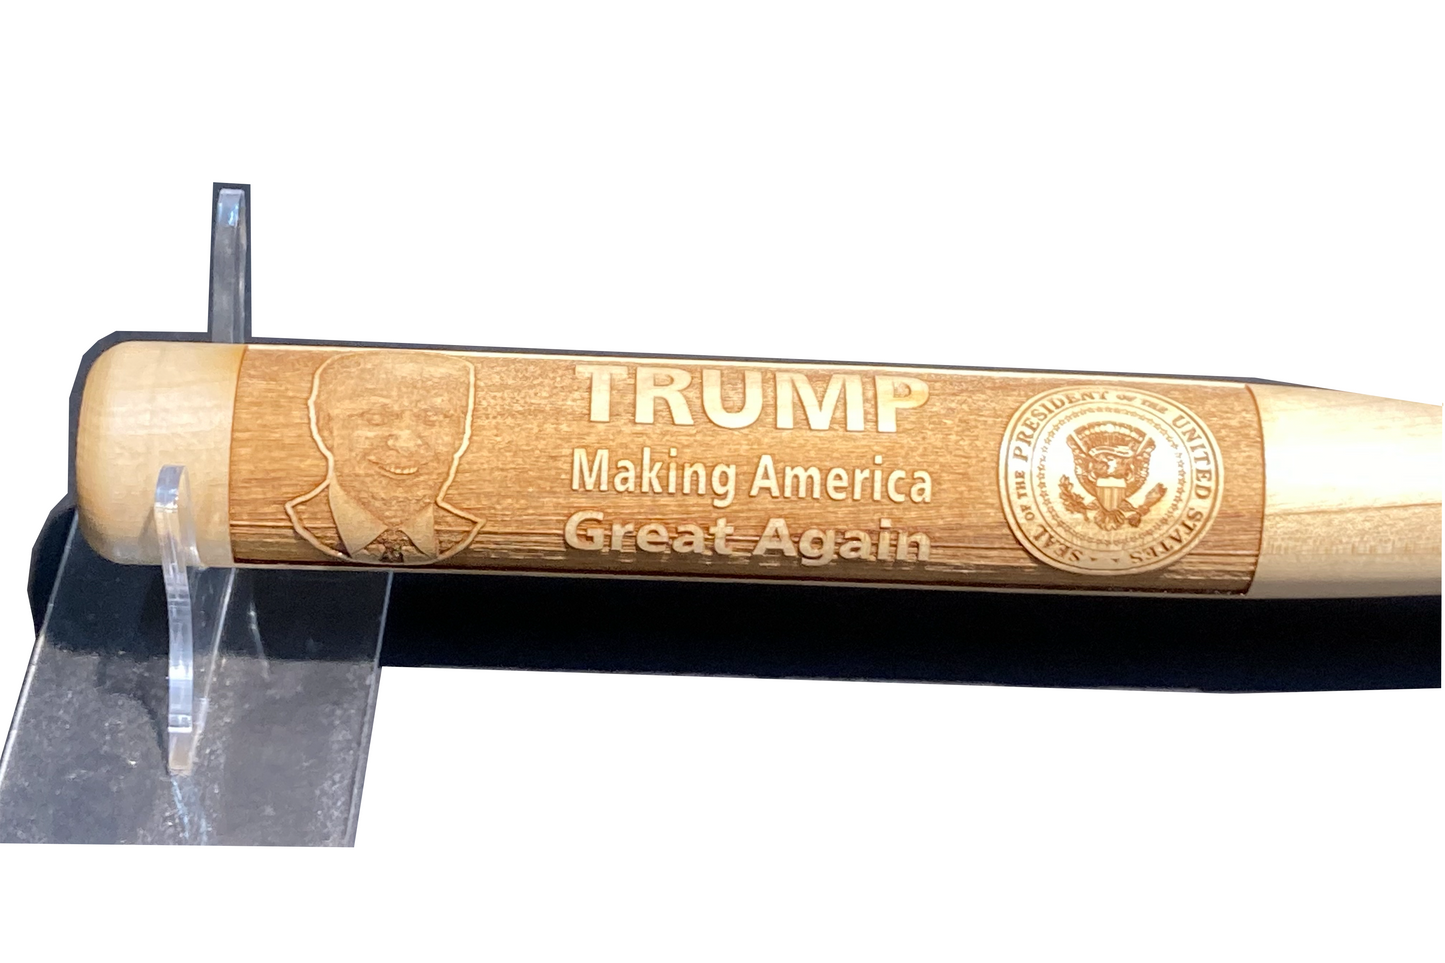 Option 1: Trump "Making America Great Again"